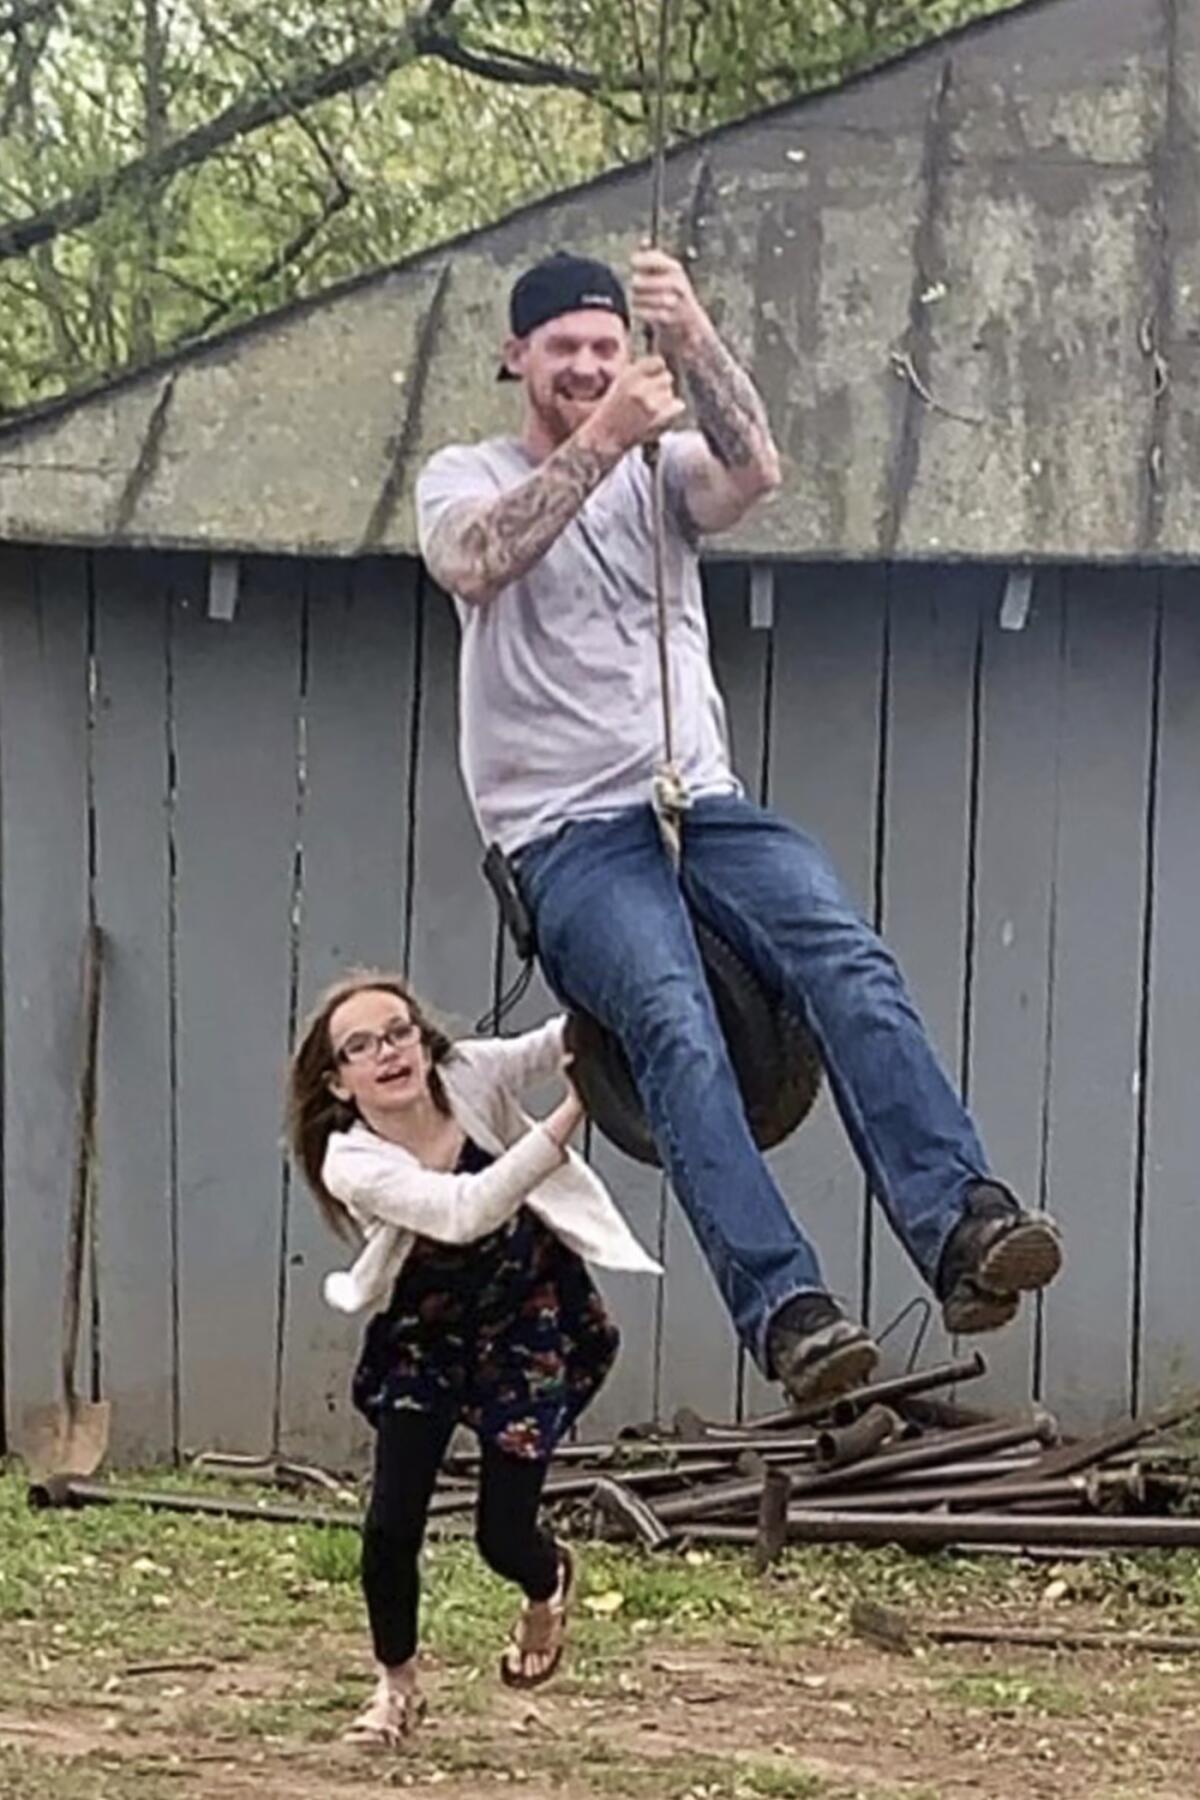 Matt Jones and his niece playing on a tire swing.